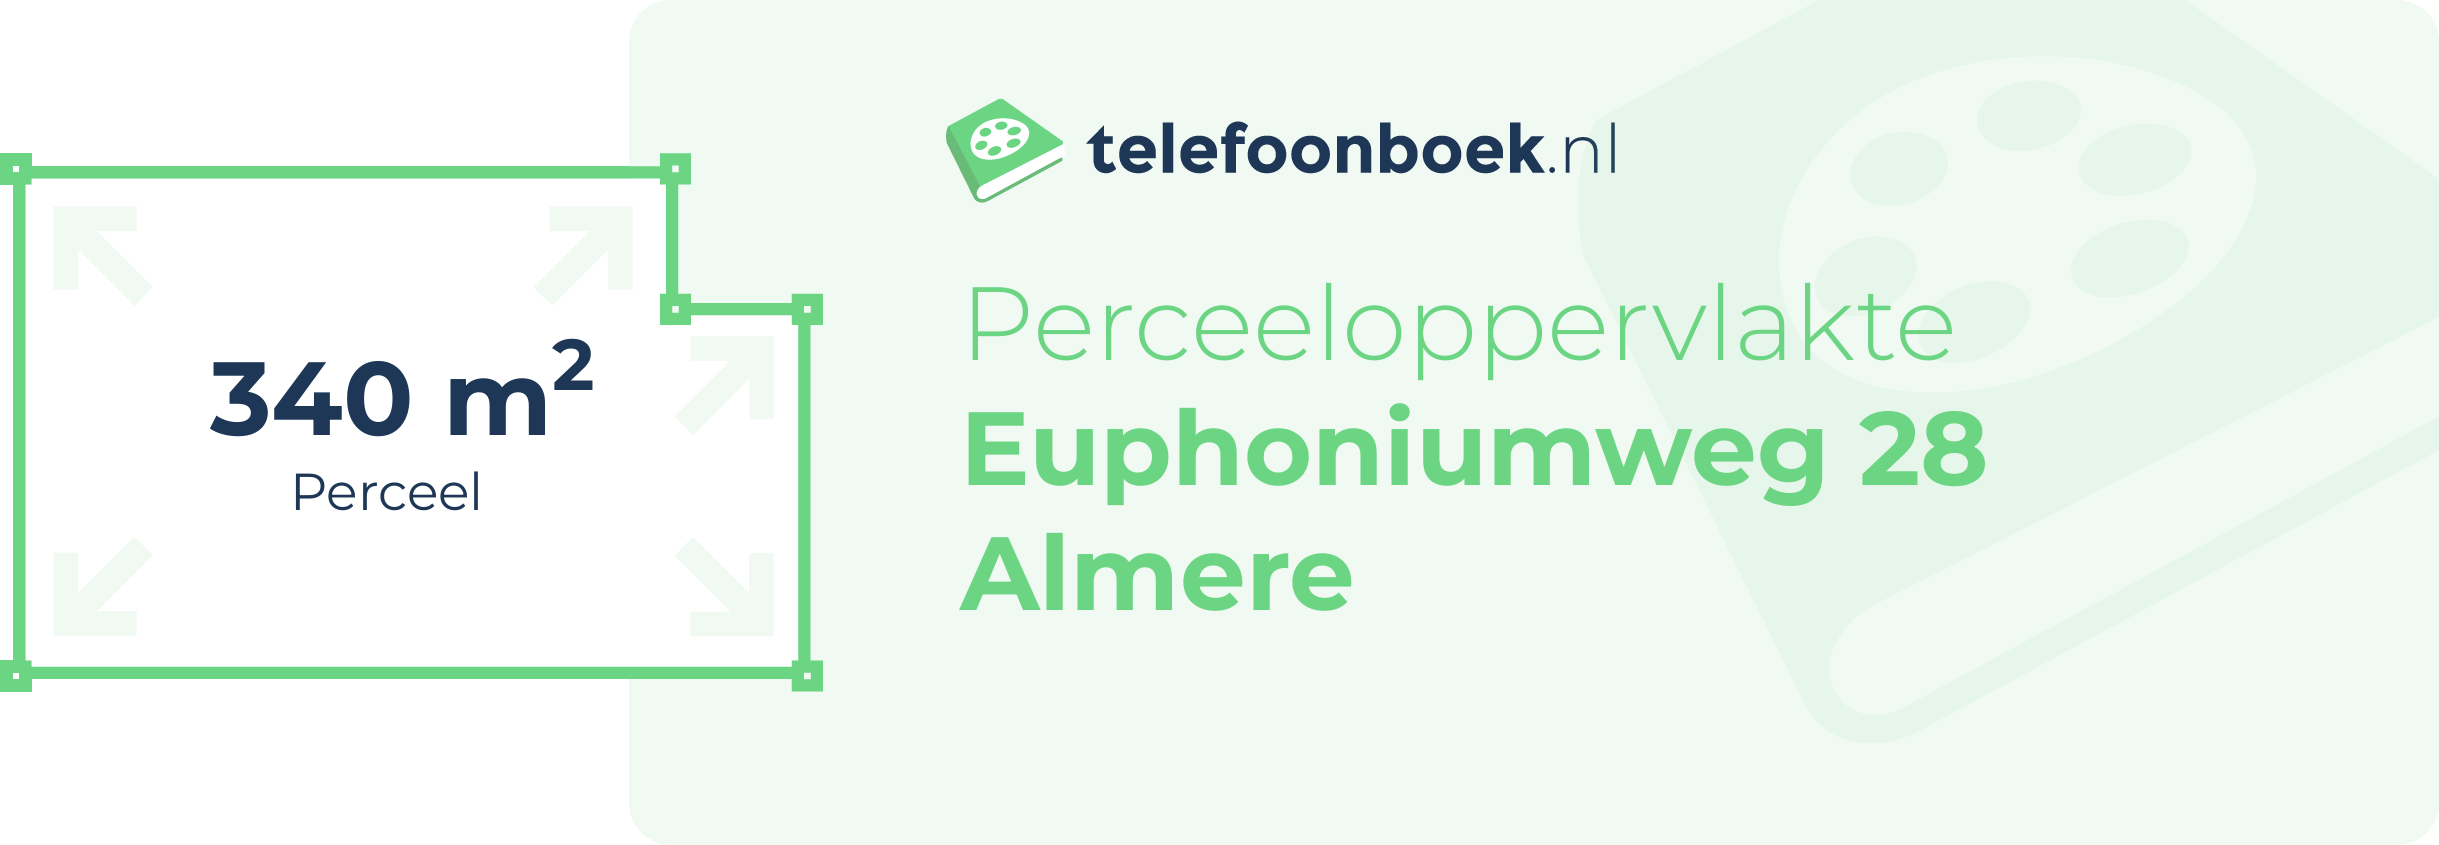 Perceeloppervlakte Euphoniumweg 28 Almere